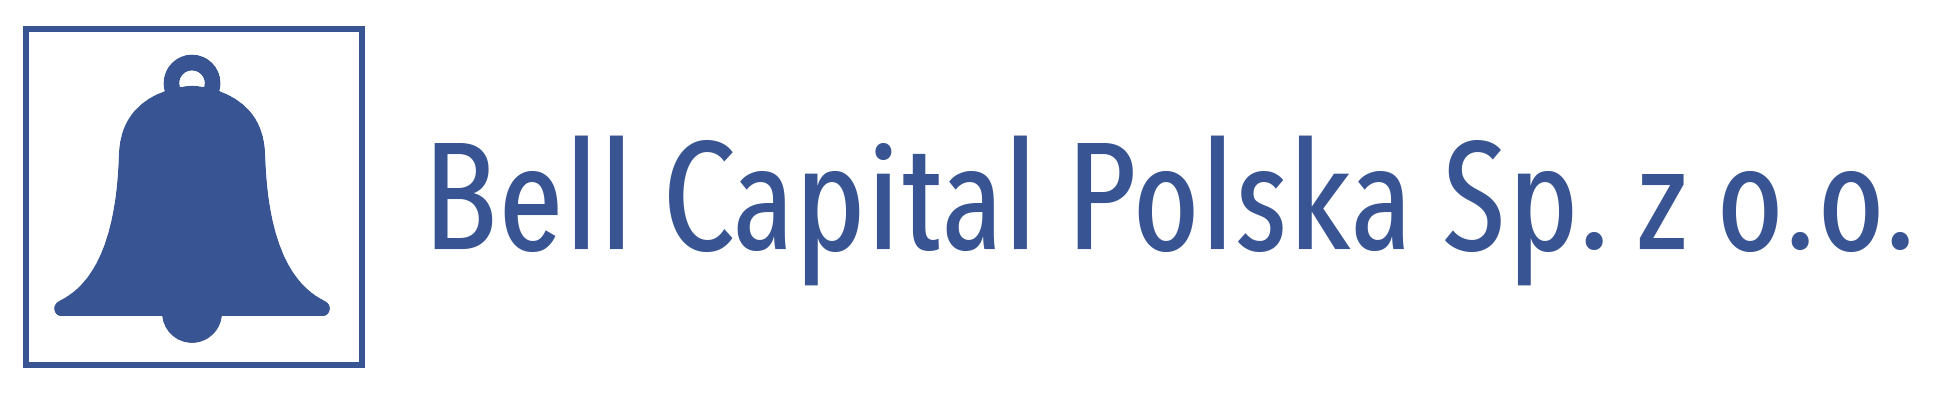 Bell Capital